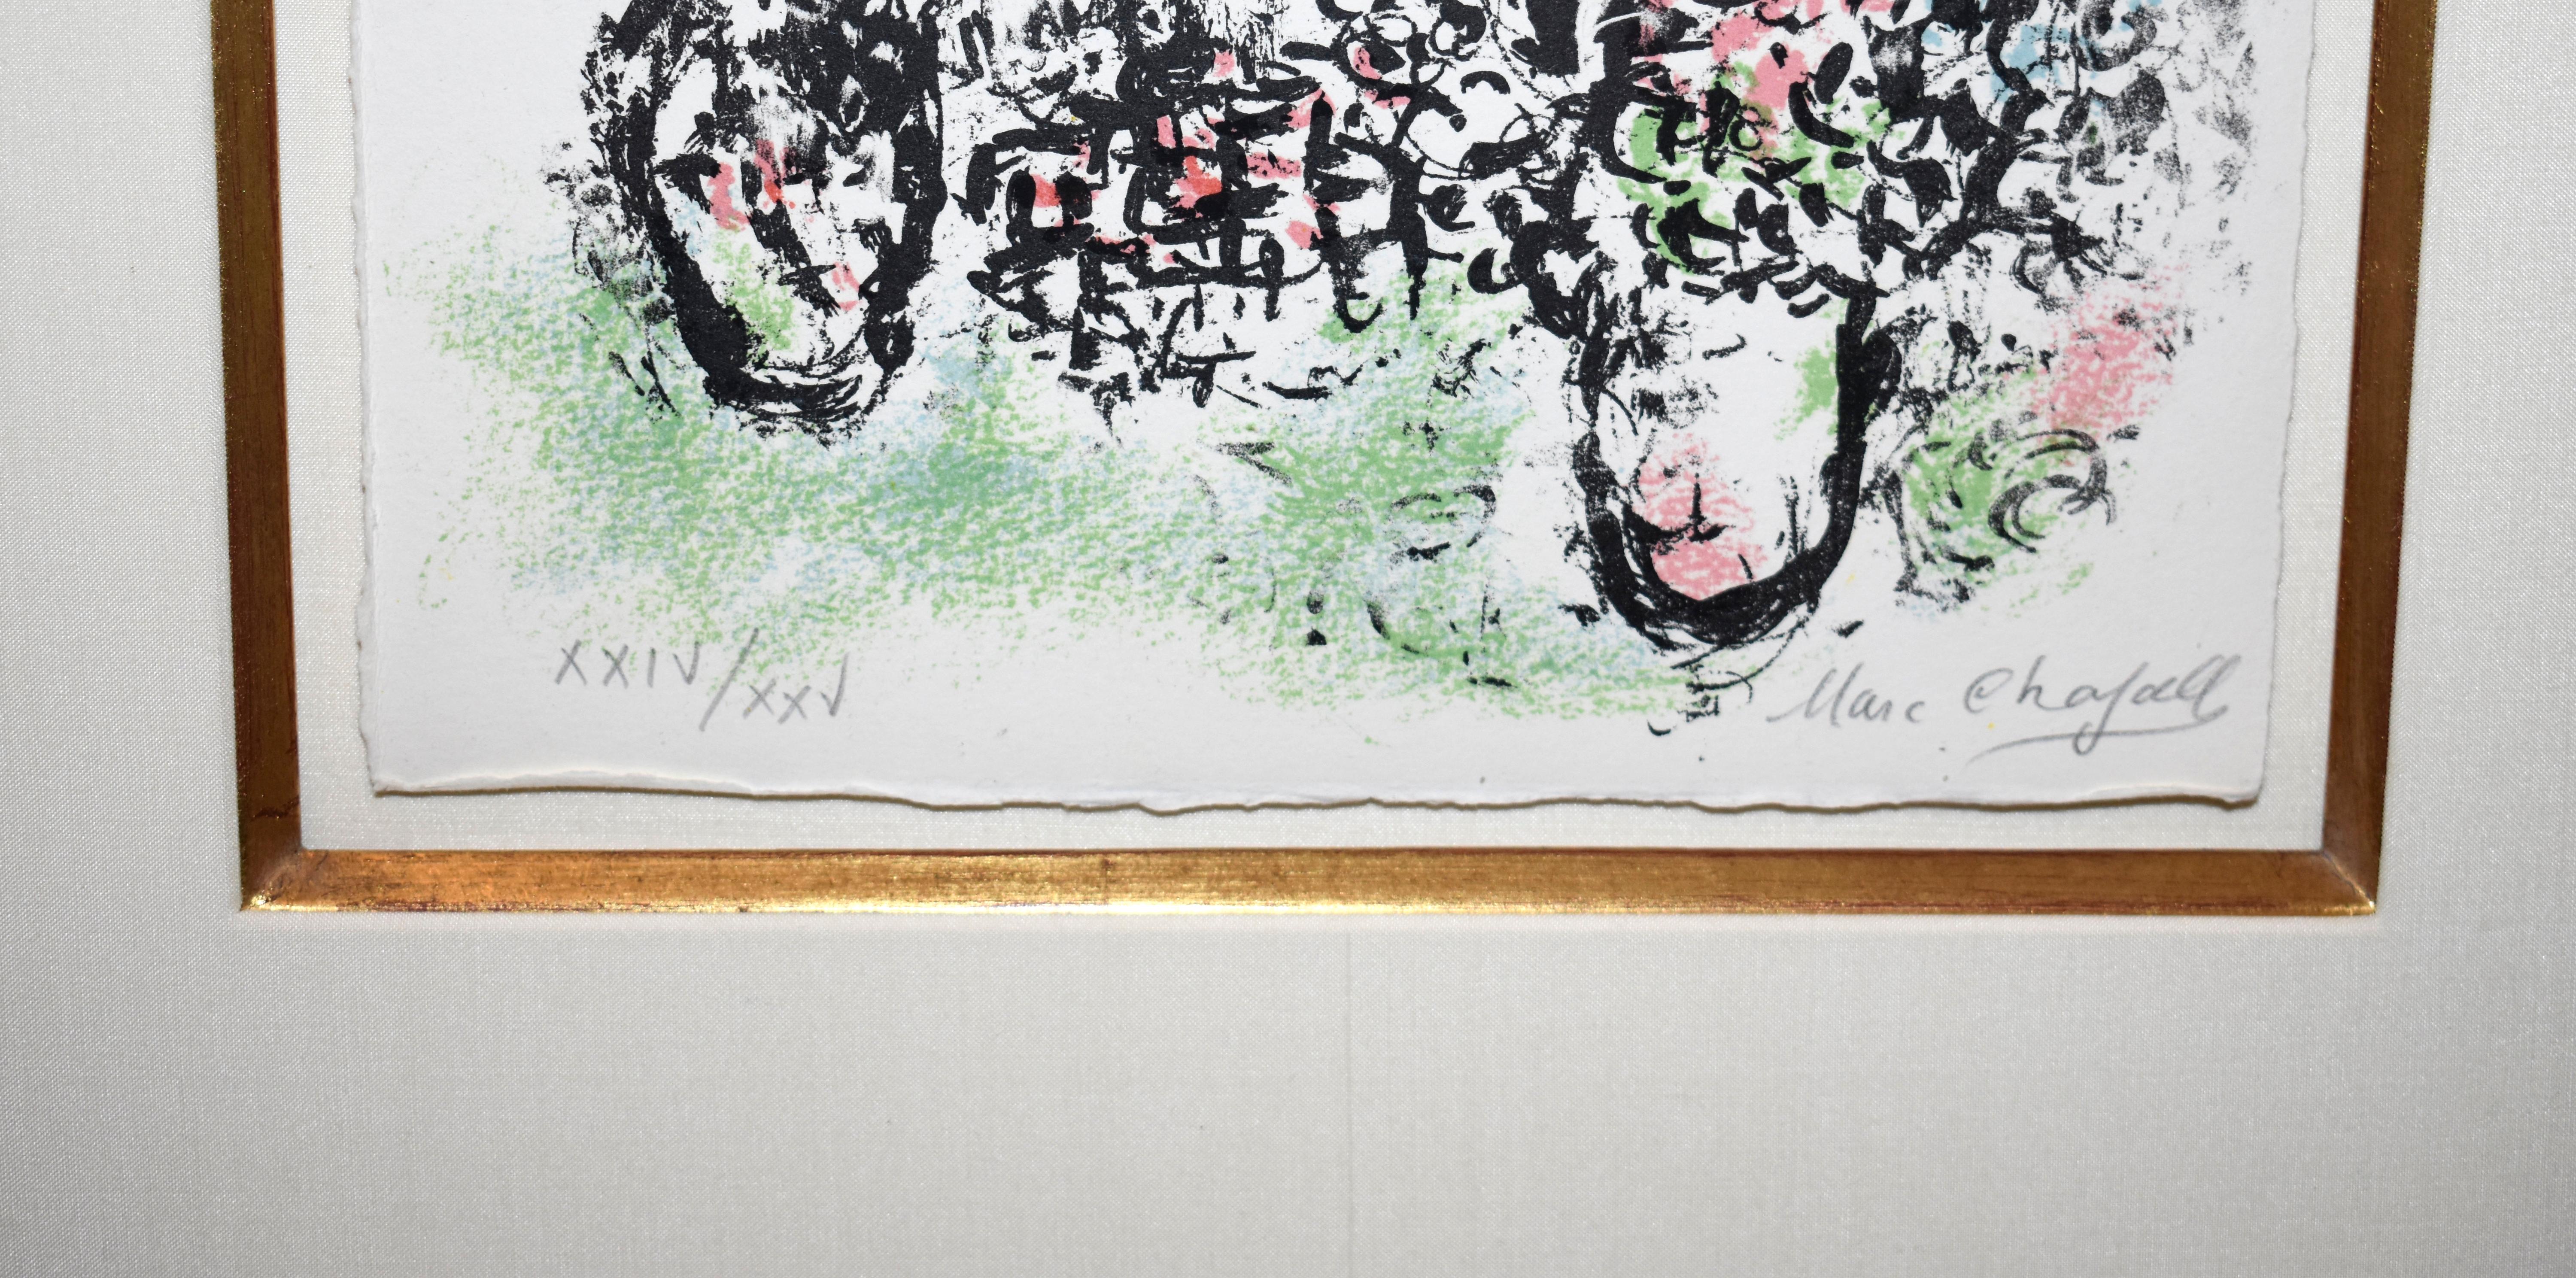 Artist: Marc Chagall
Medium: Original lithograph on Arches wove paper
Title: La Mise en Mots
Portfolio: La Mise en Mots
Year: 1969
Edition: XXIV/XXV
Framed Size: 28 x 26 inches
Reference: Mourlot 584.A
Signed: Signed in pencil
Provenance: Martin